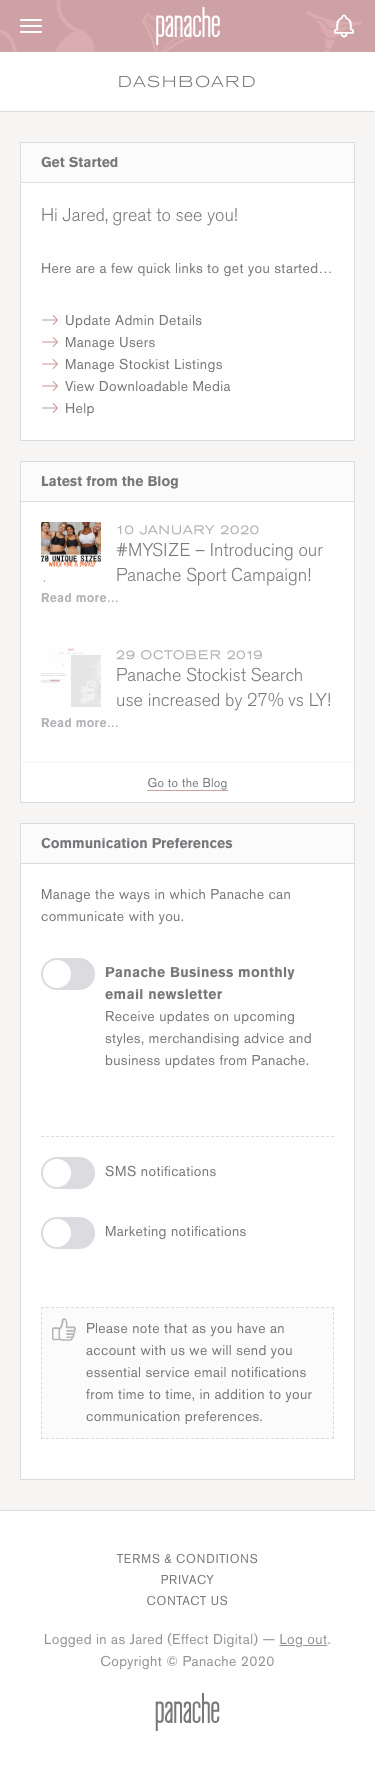 Panache Hub dashboard (mobile)